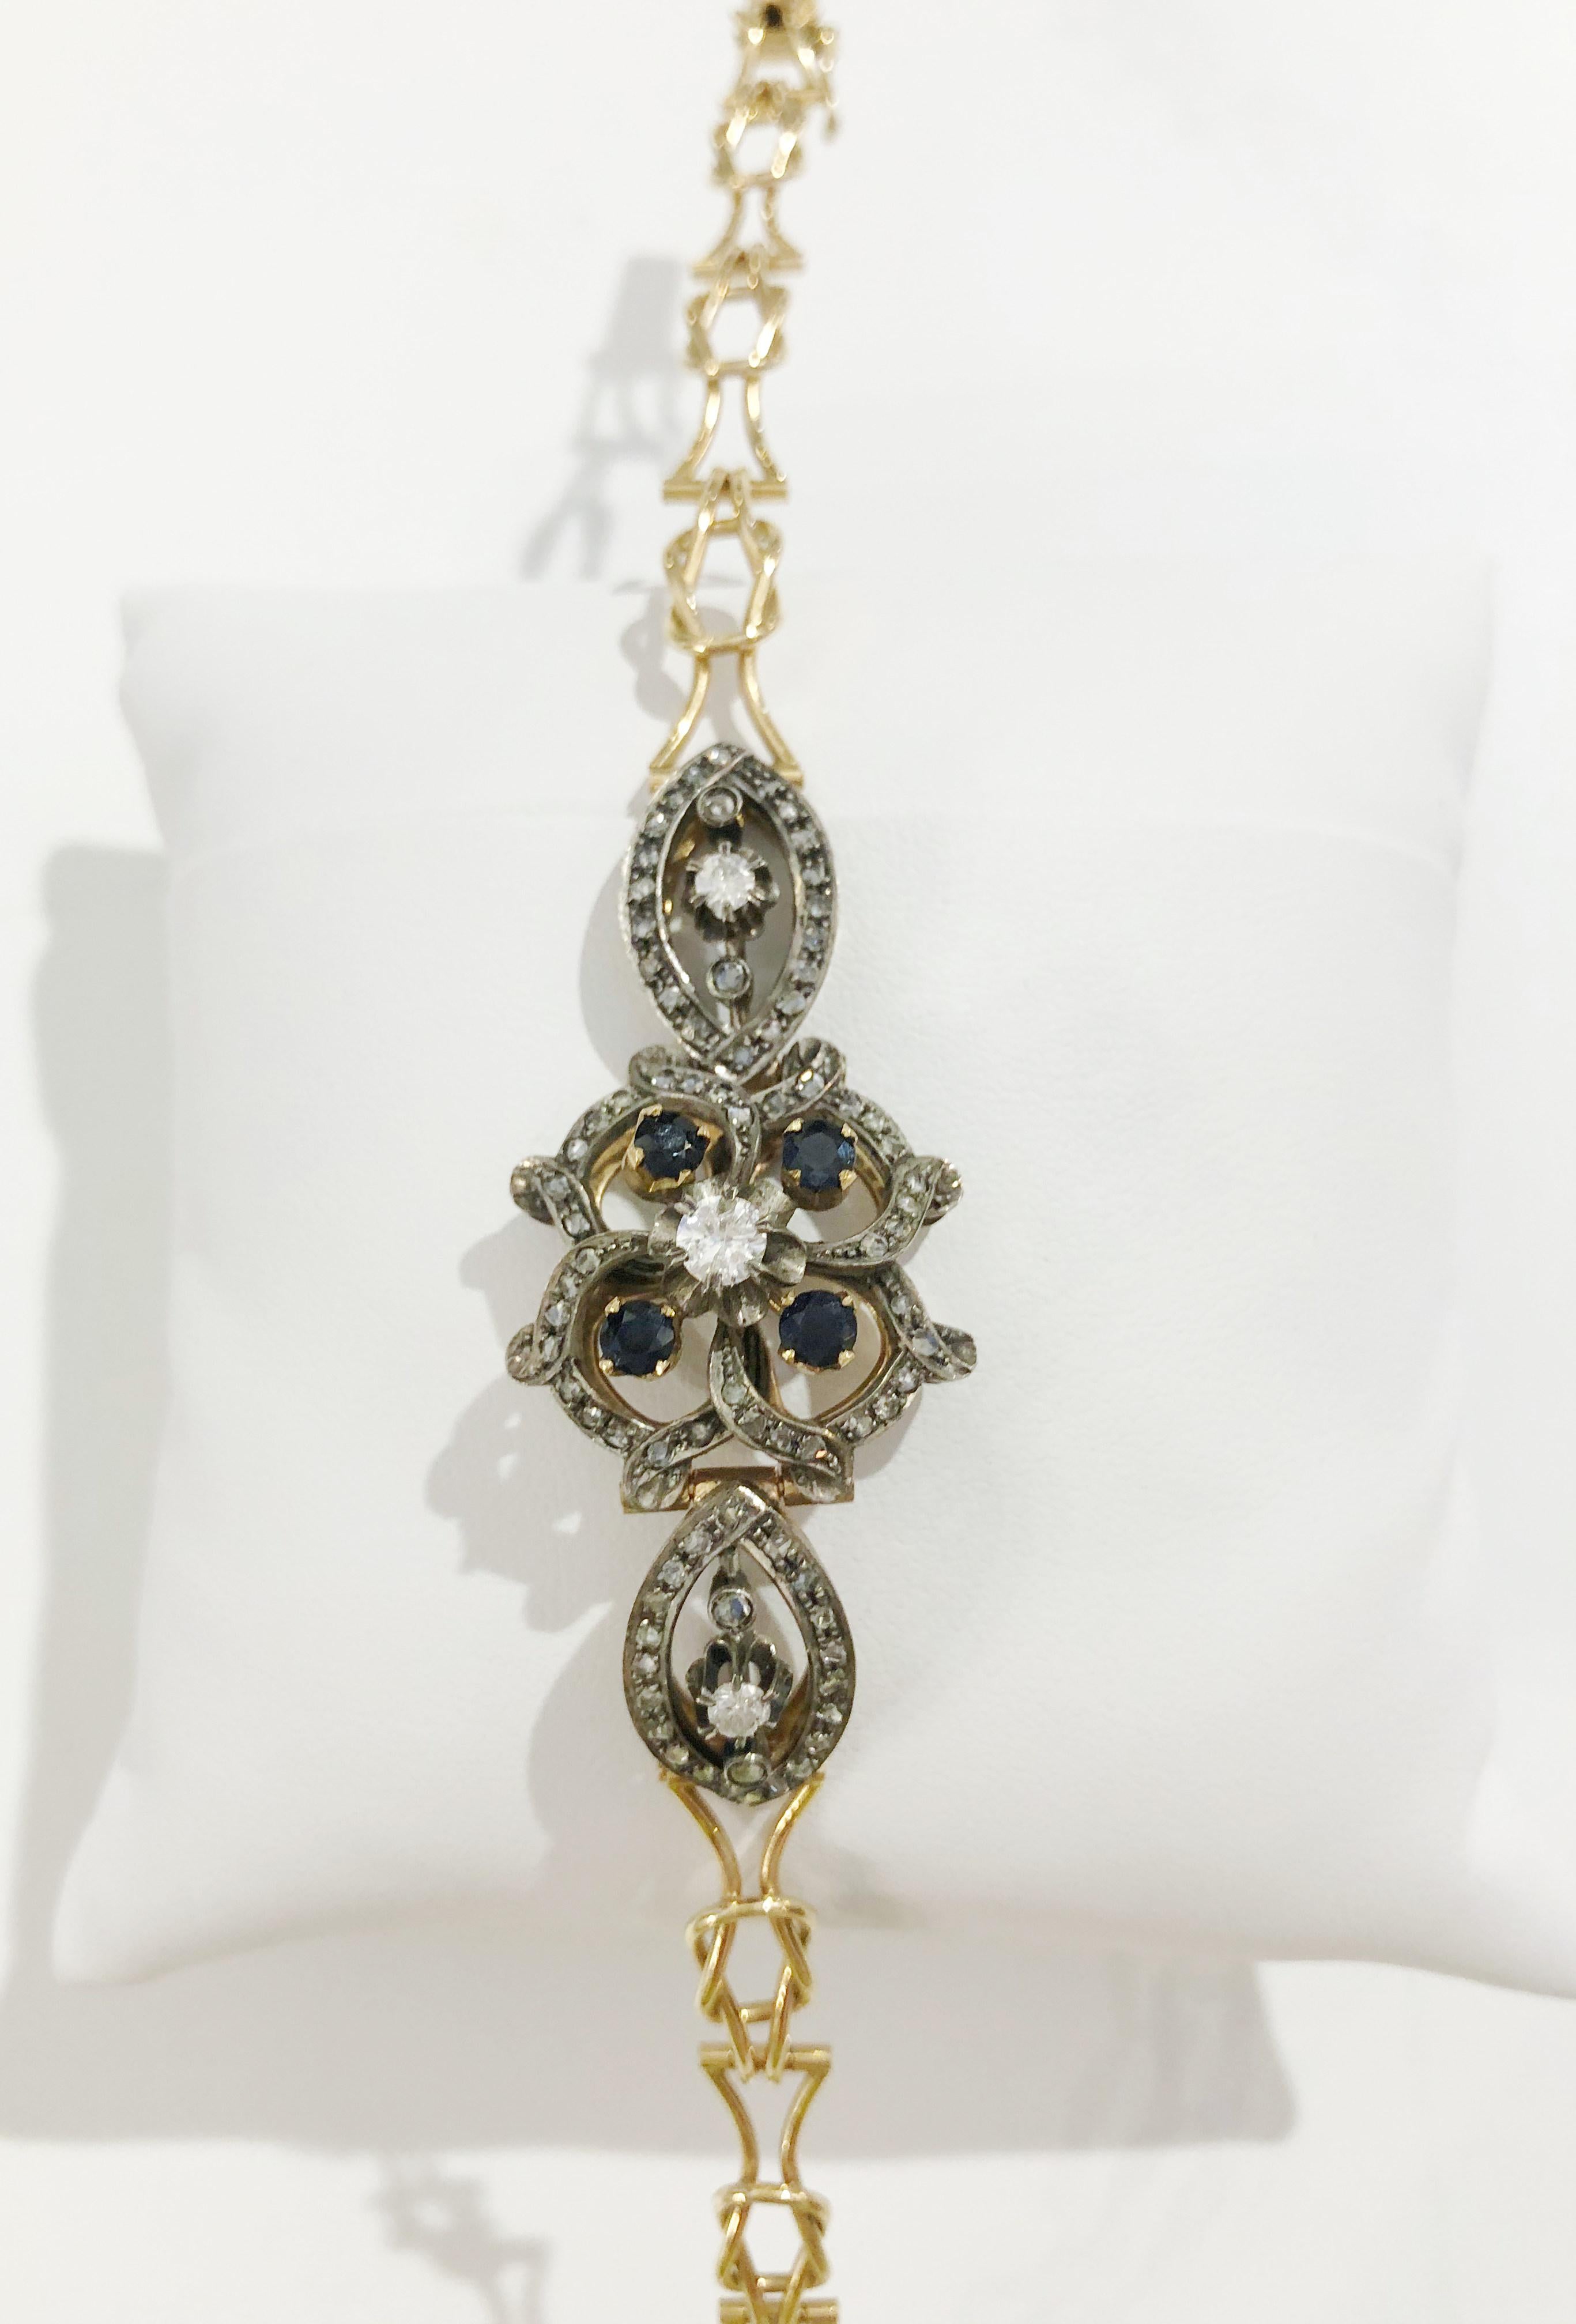 Vintage 18 karat gold bracelet with blue sapphires and brilliant diamonds, Italy 1950-1970
Length 19 cm